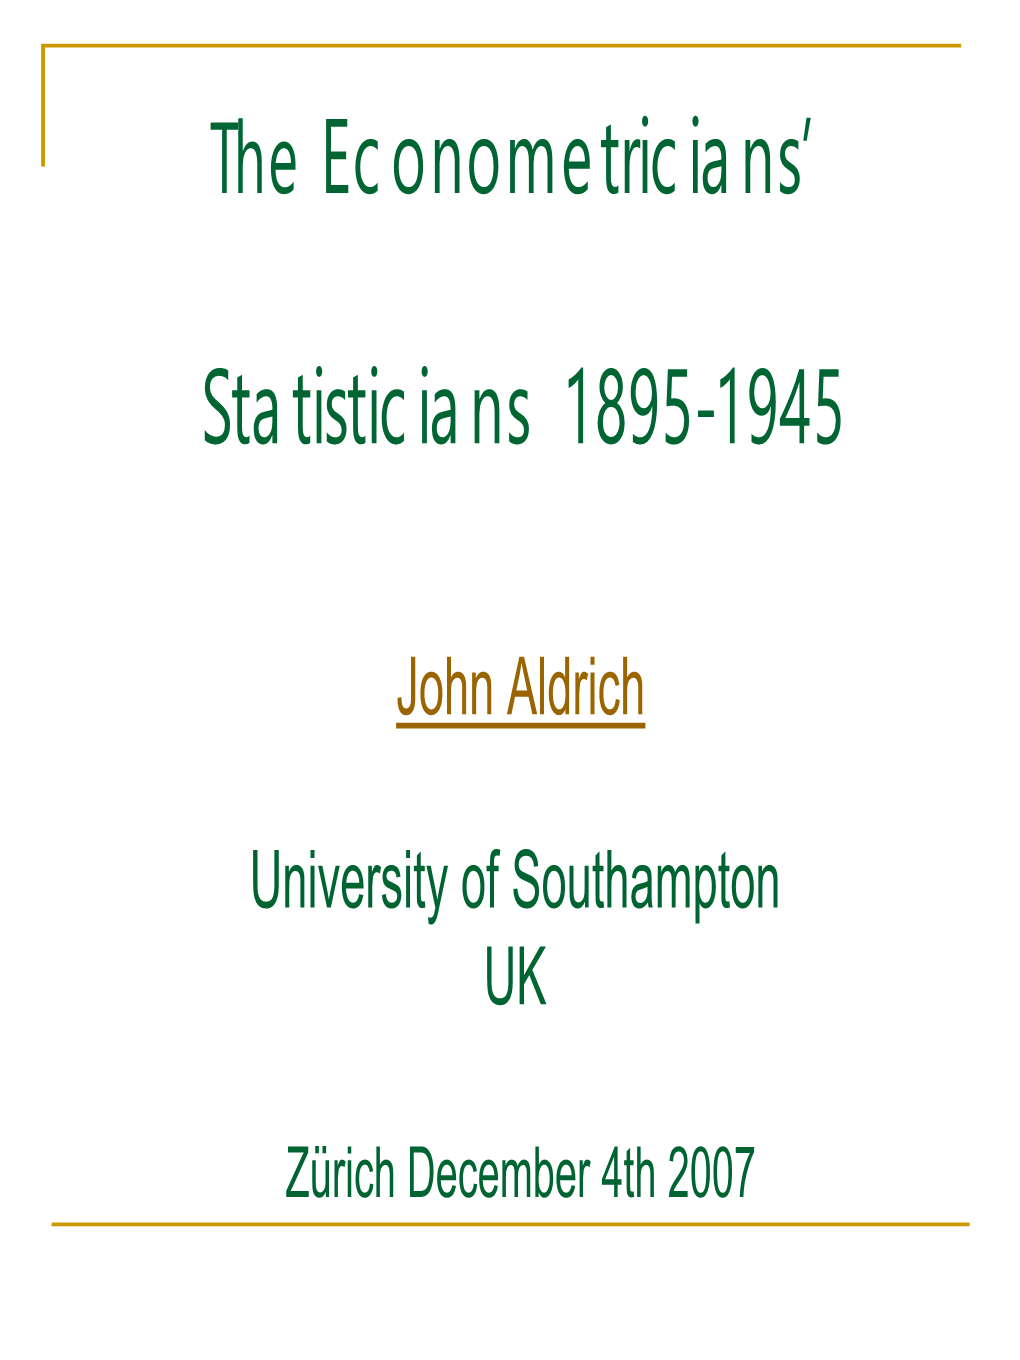 Econometricians' Statitistcians